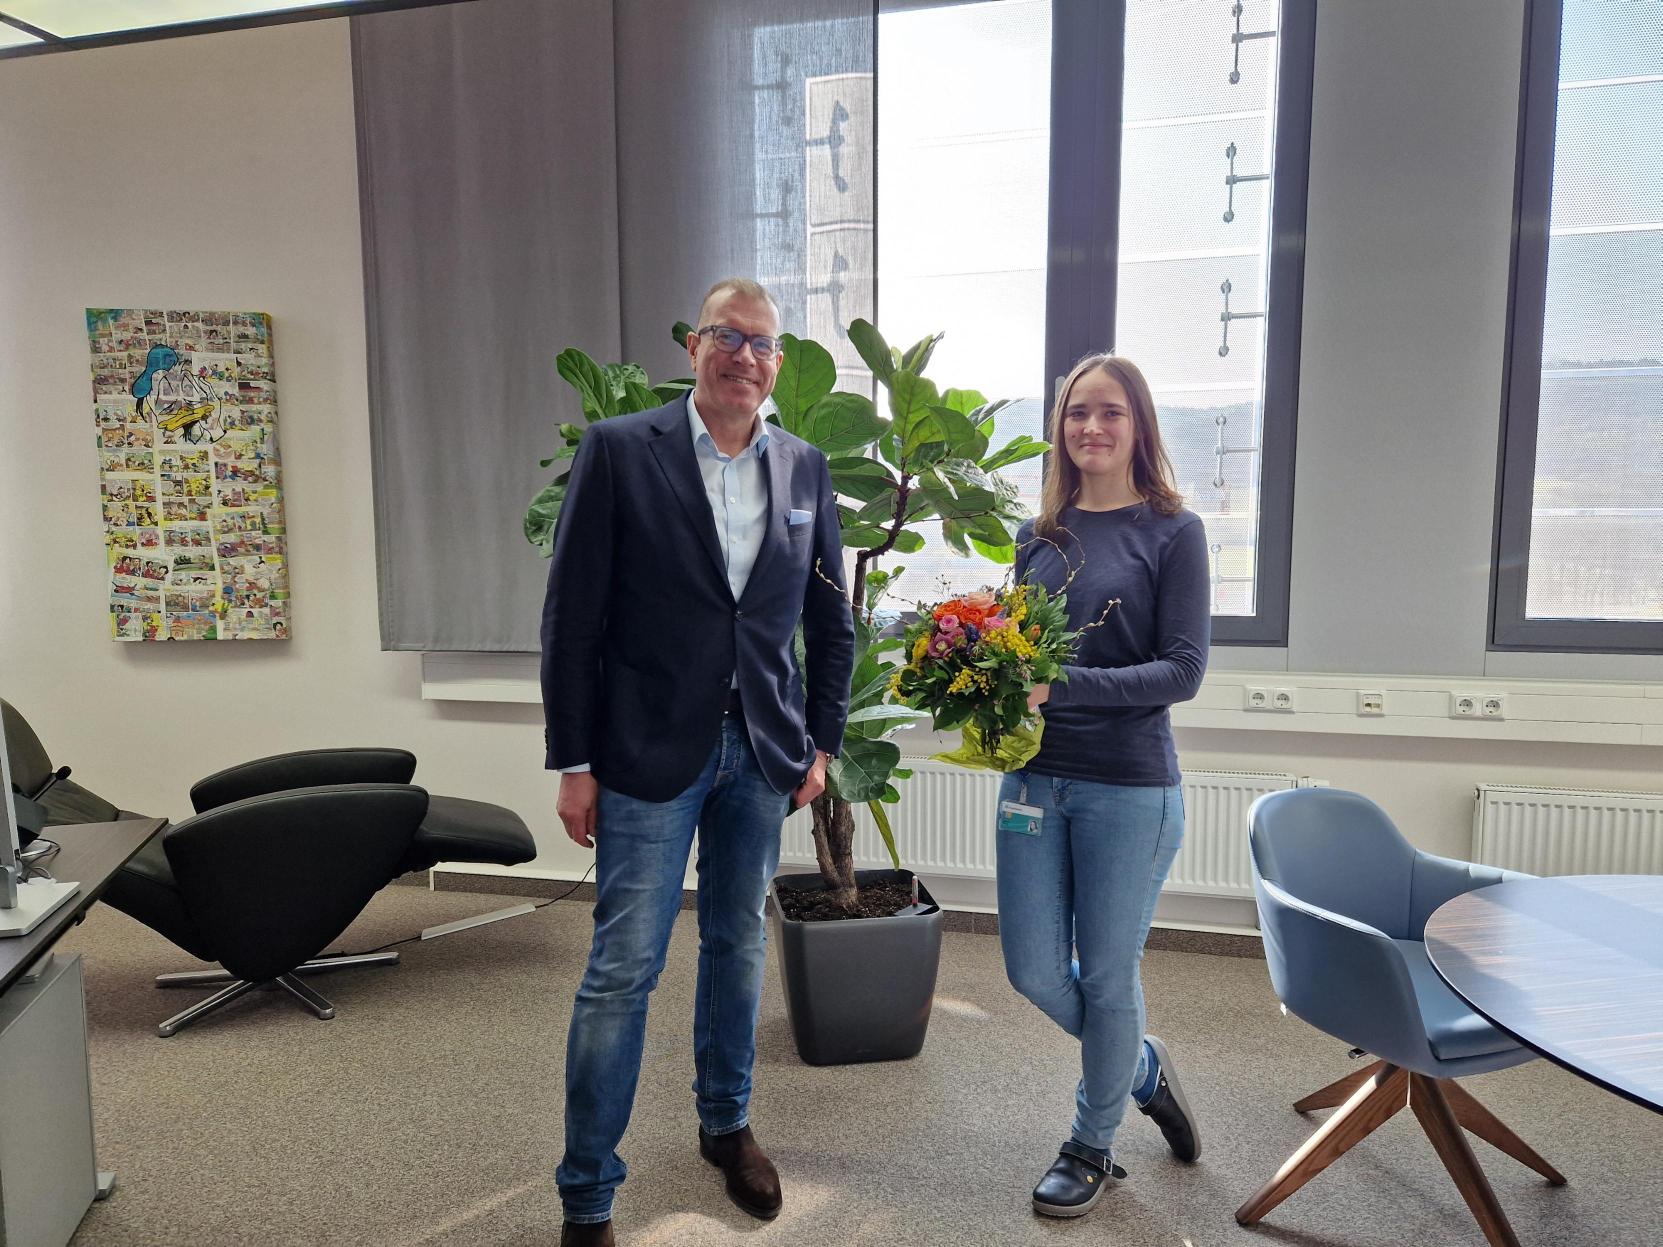 Institute director Andreas Tünnermann congratulates Jessica Thiede on graduating. 